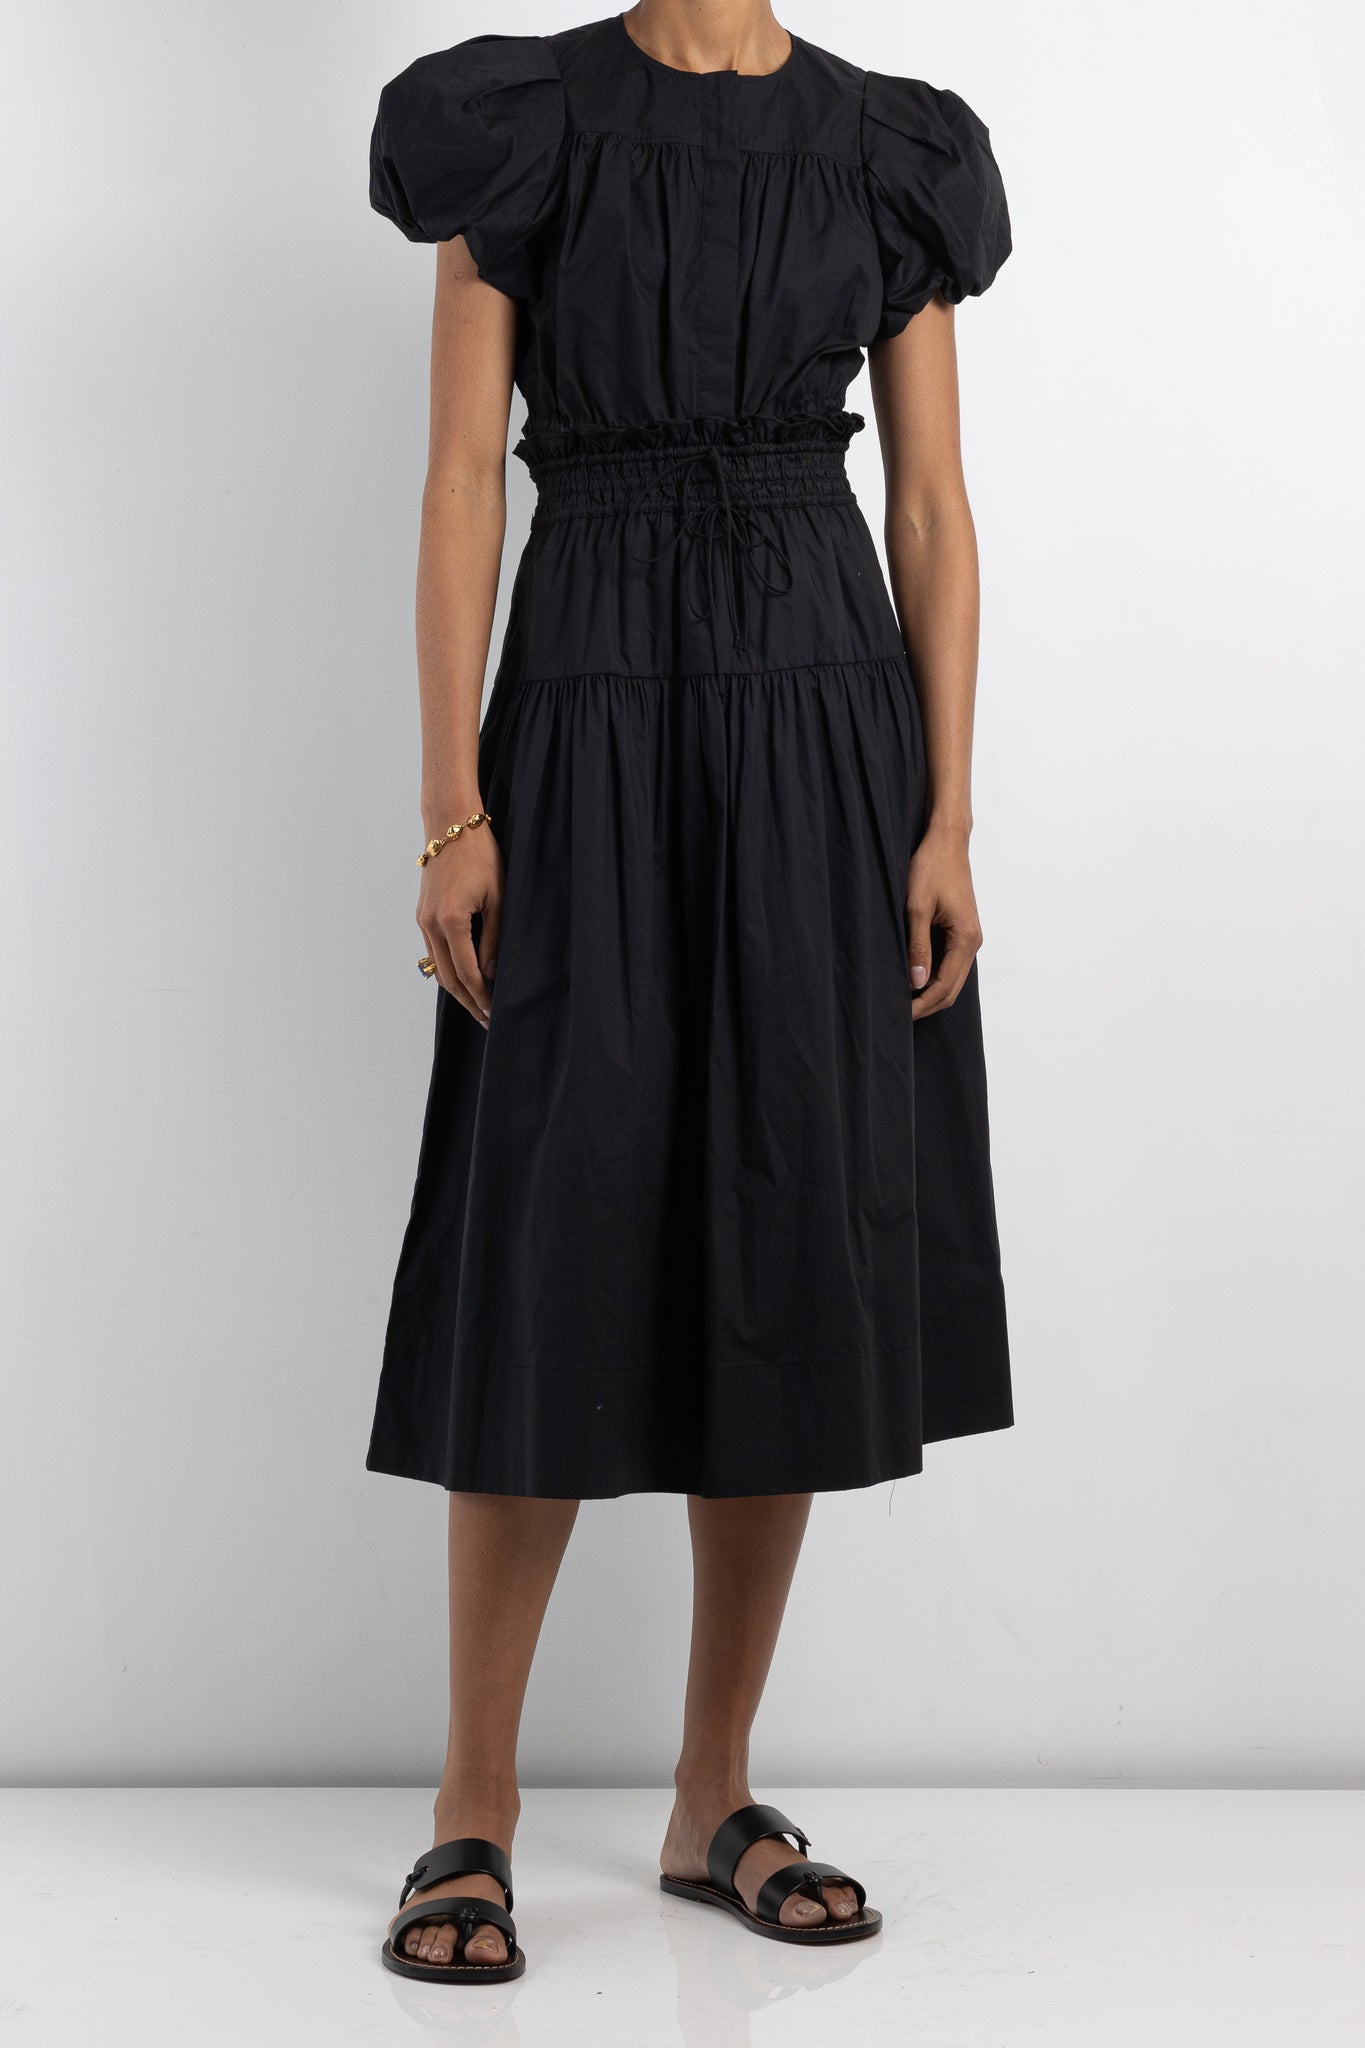 Wmens skirt | Ulla Johnson Kyra skirt | The Standard Store